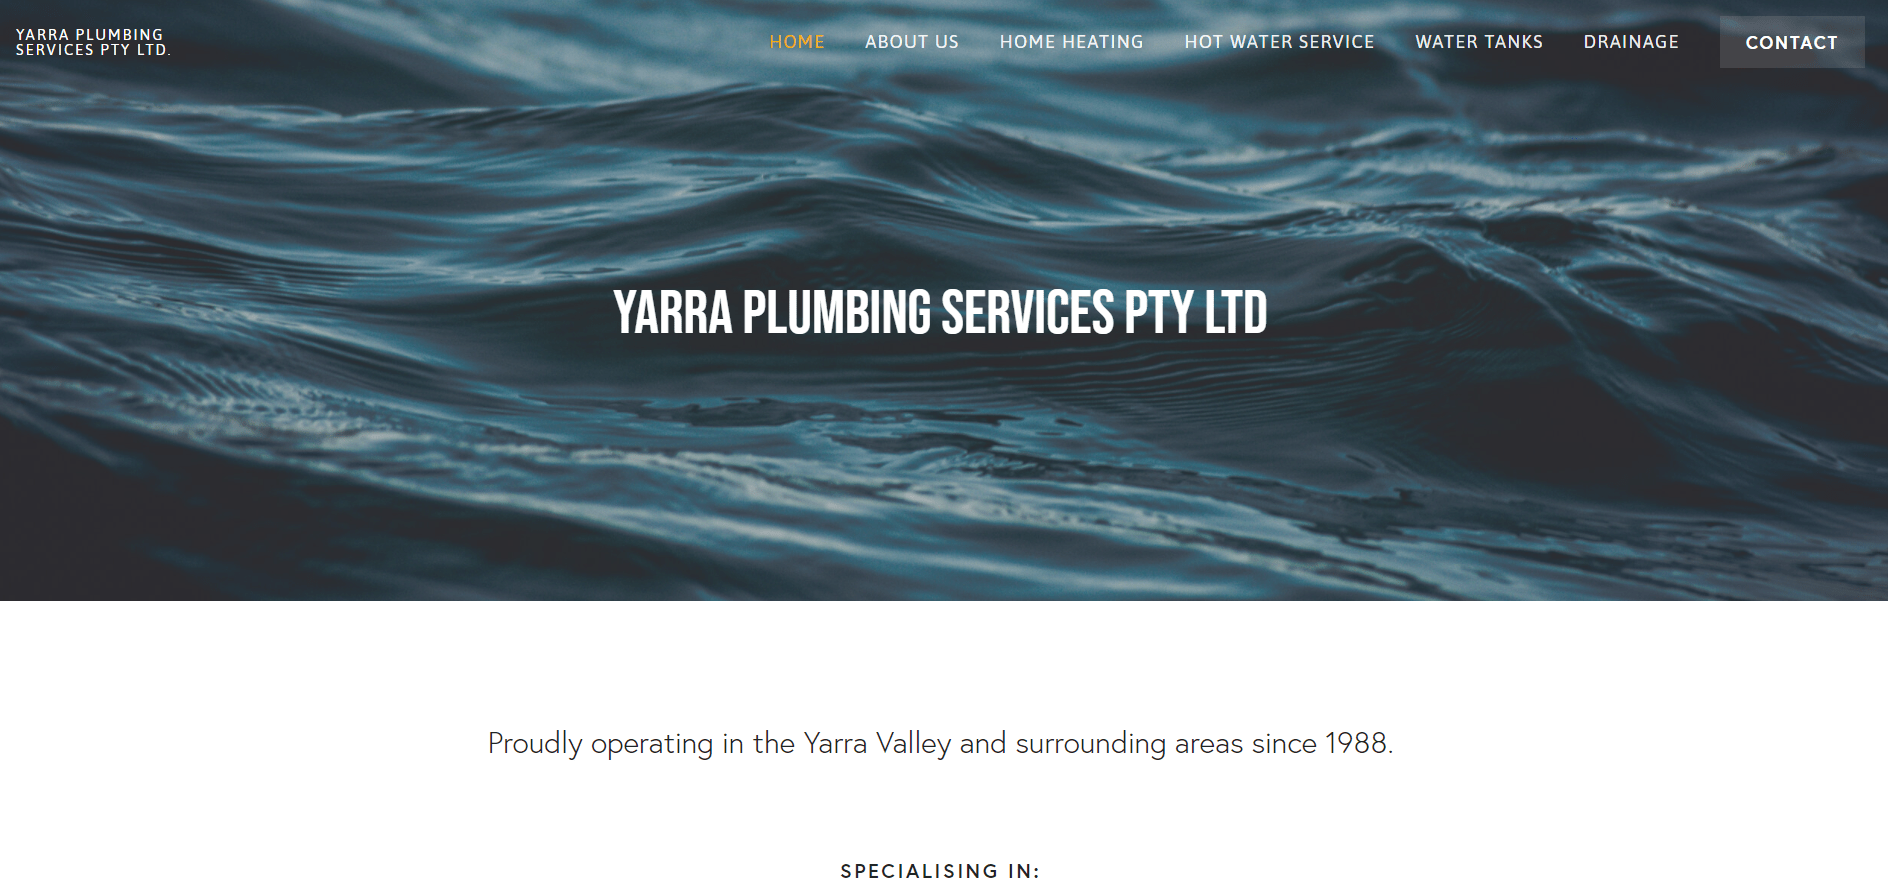 Yarra Plumbing Services Pty Ltd